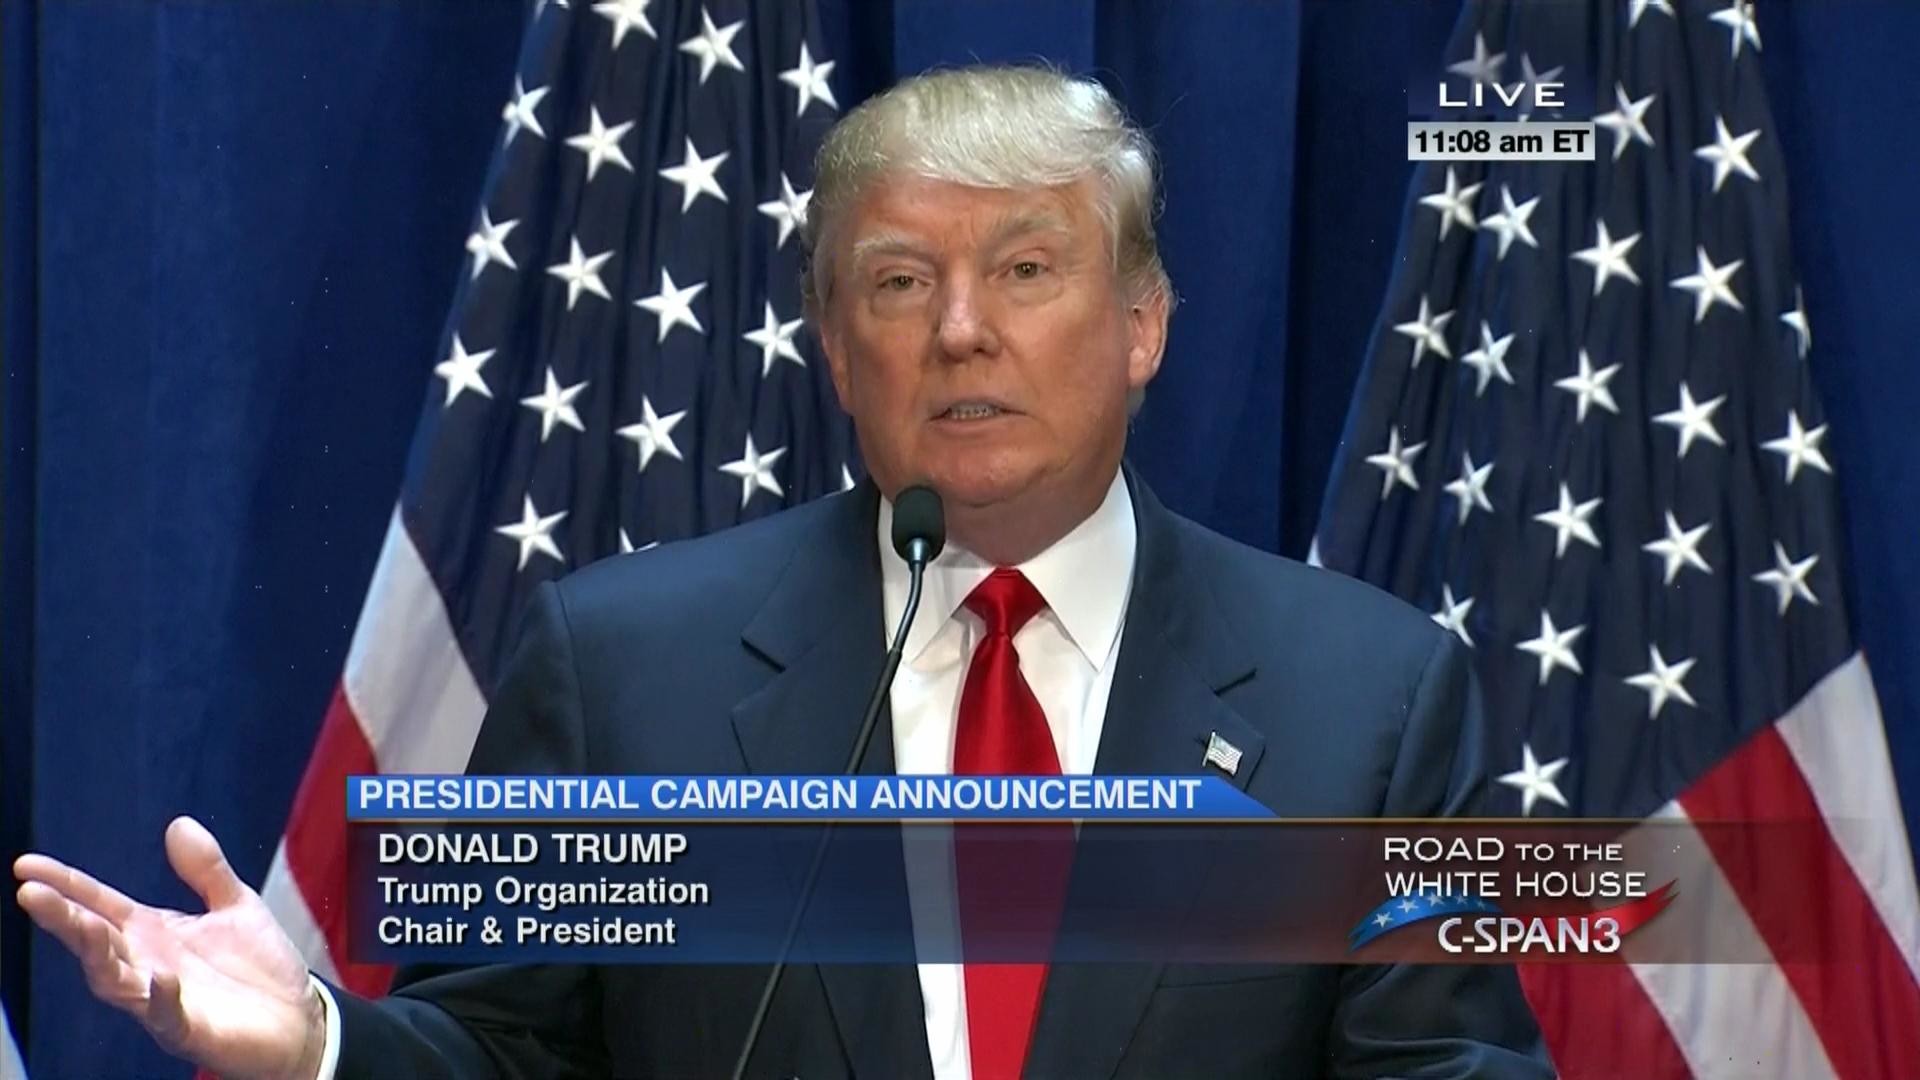 1920x1080 Donald Trump Presidential Campaign Announcement, Jun 16 2015 | C-SPAN.org